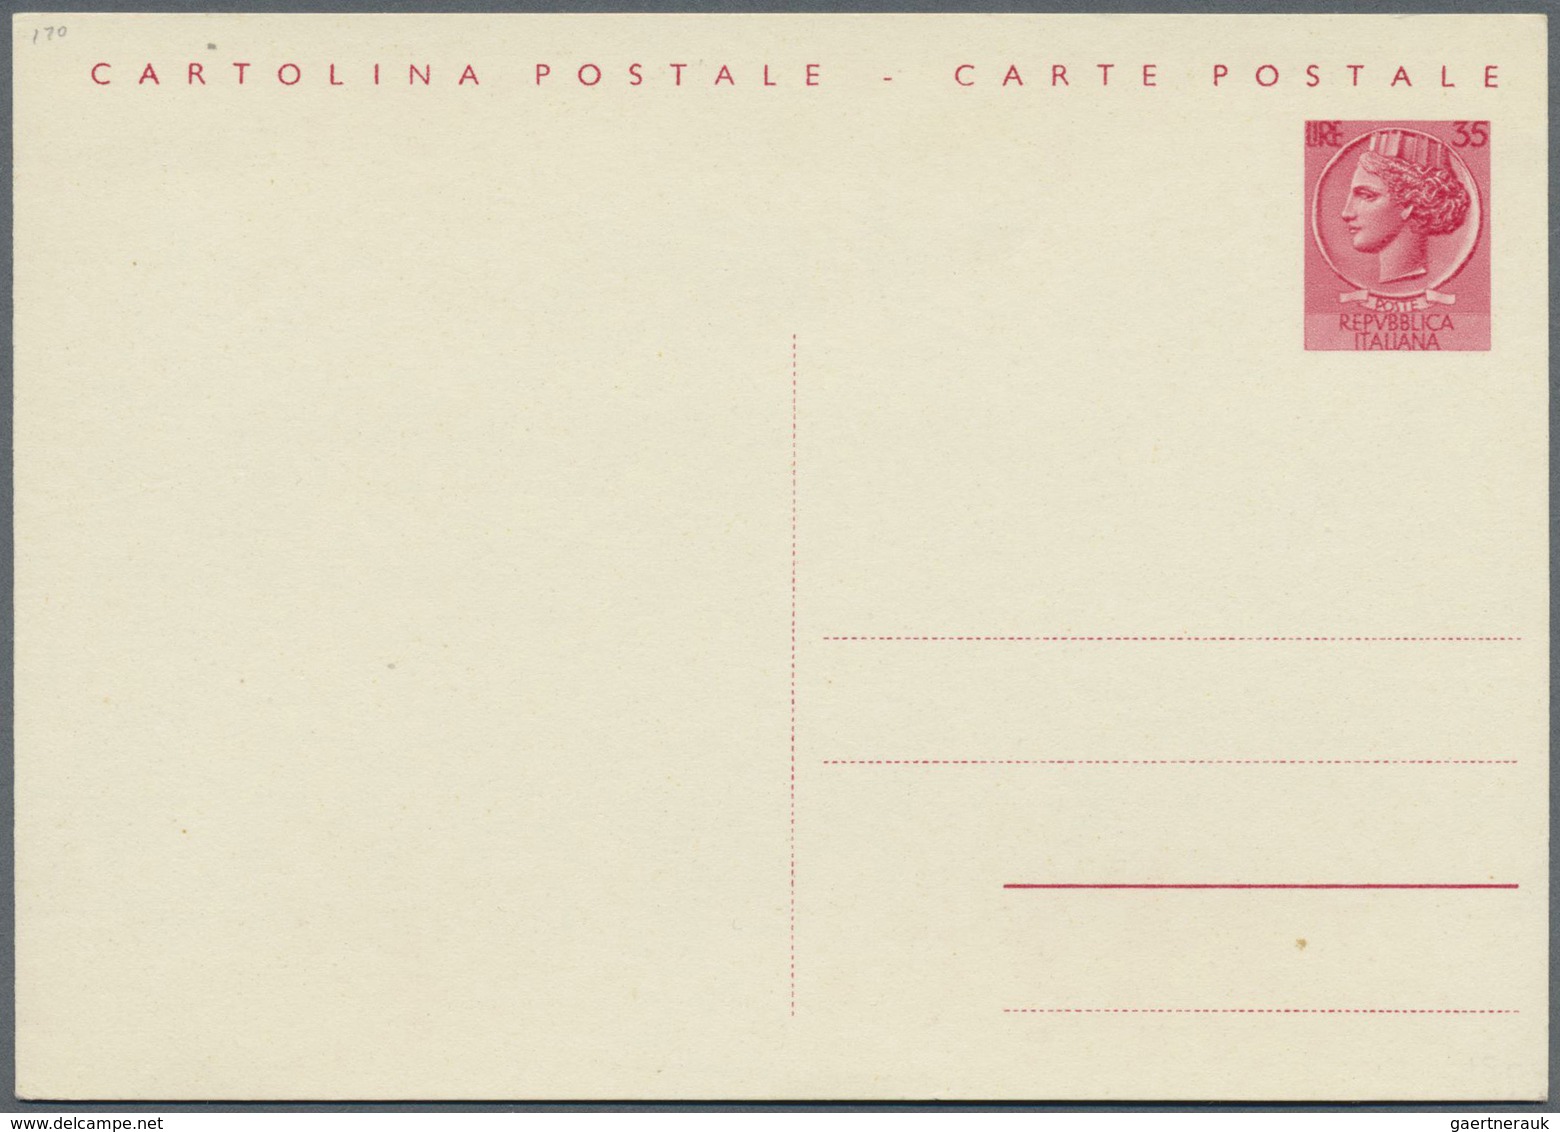 GA Italien - Ganzsachen: 1956: 35 L Bilingual Postal Stationary Card, Unused, Rare. (Mi. #P166; Mi. Cat - Ganzsachen